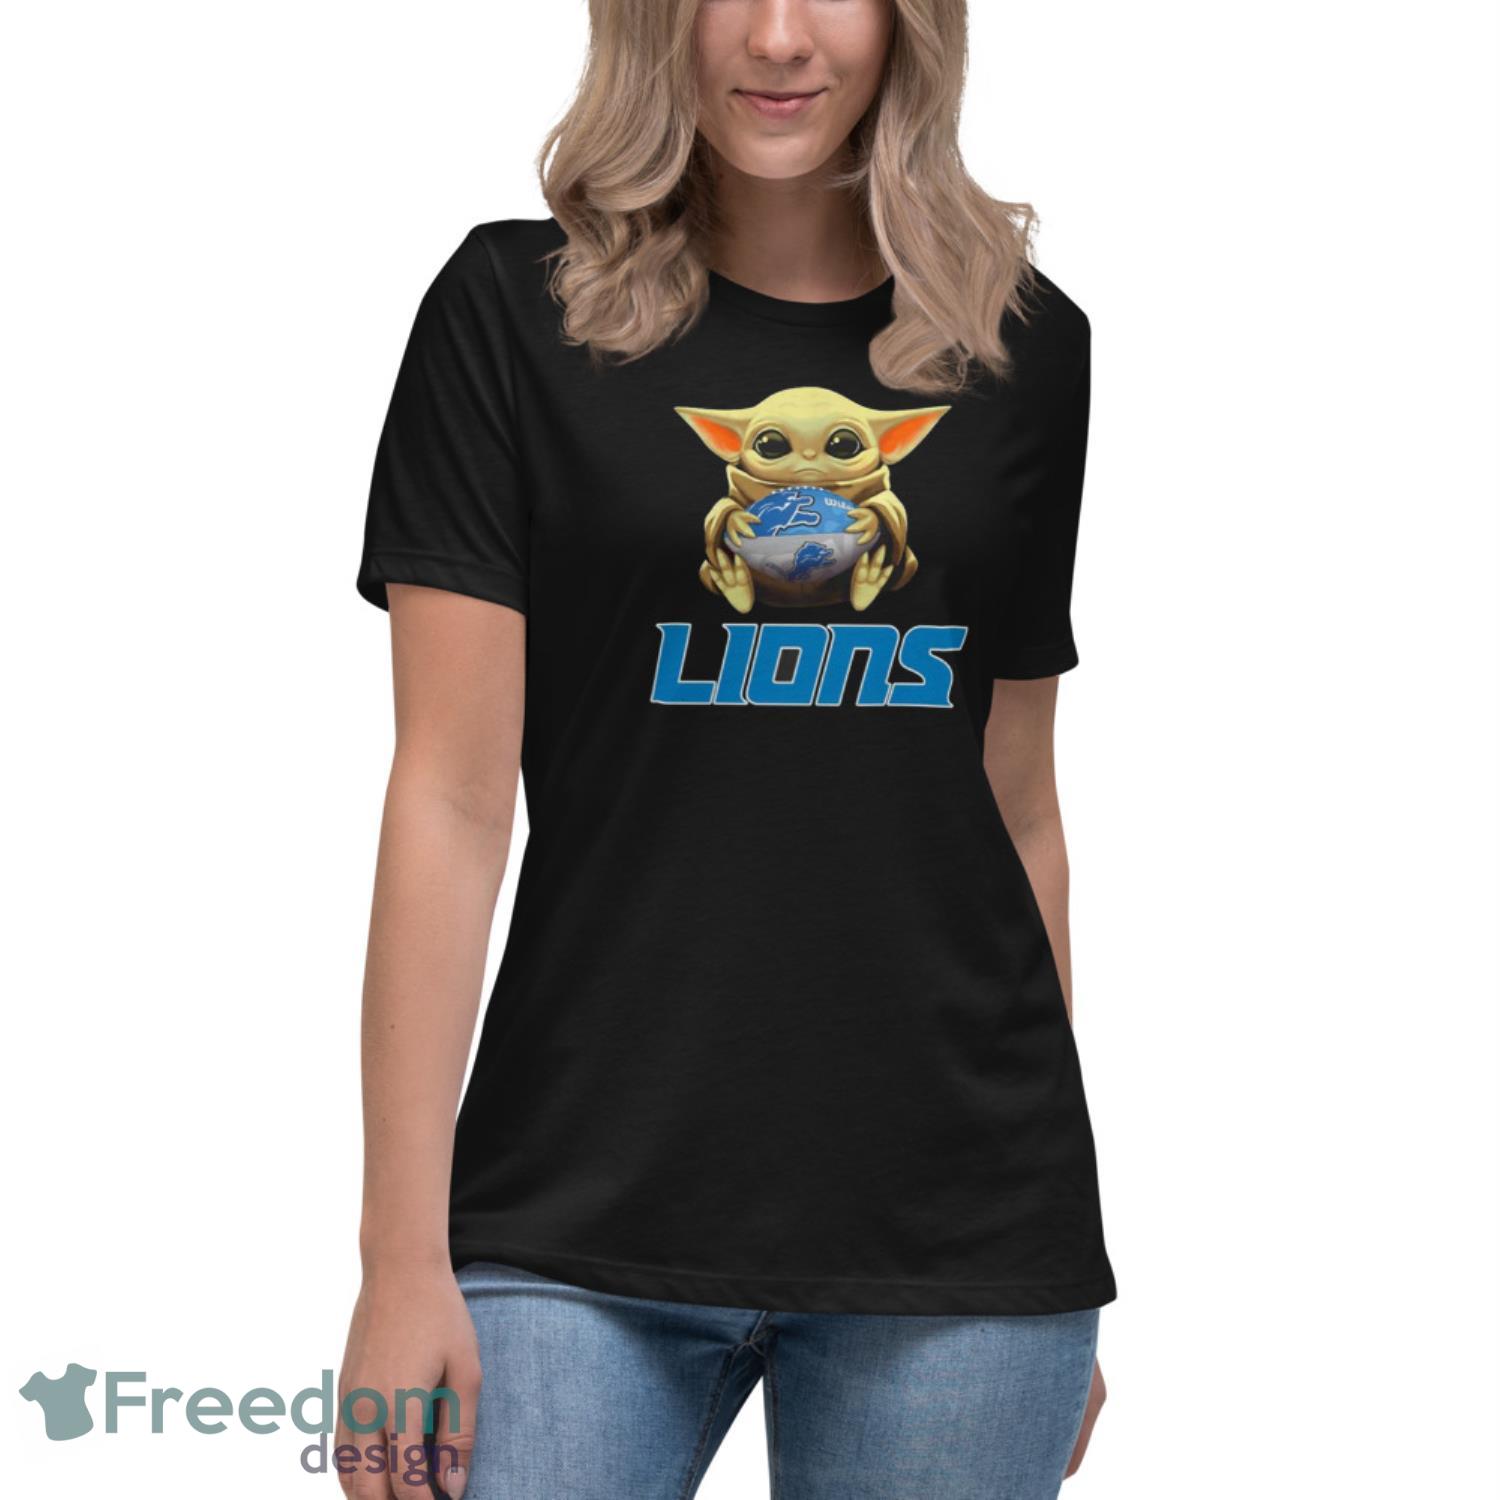 NFL Football Detroit Lions Baby Yoda Star Wars Shirt T Shirt